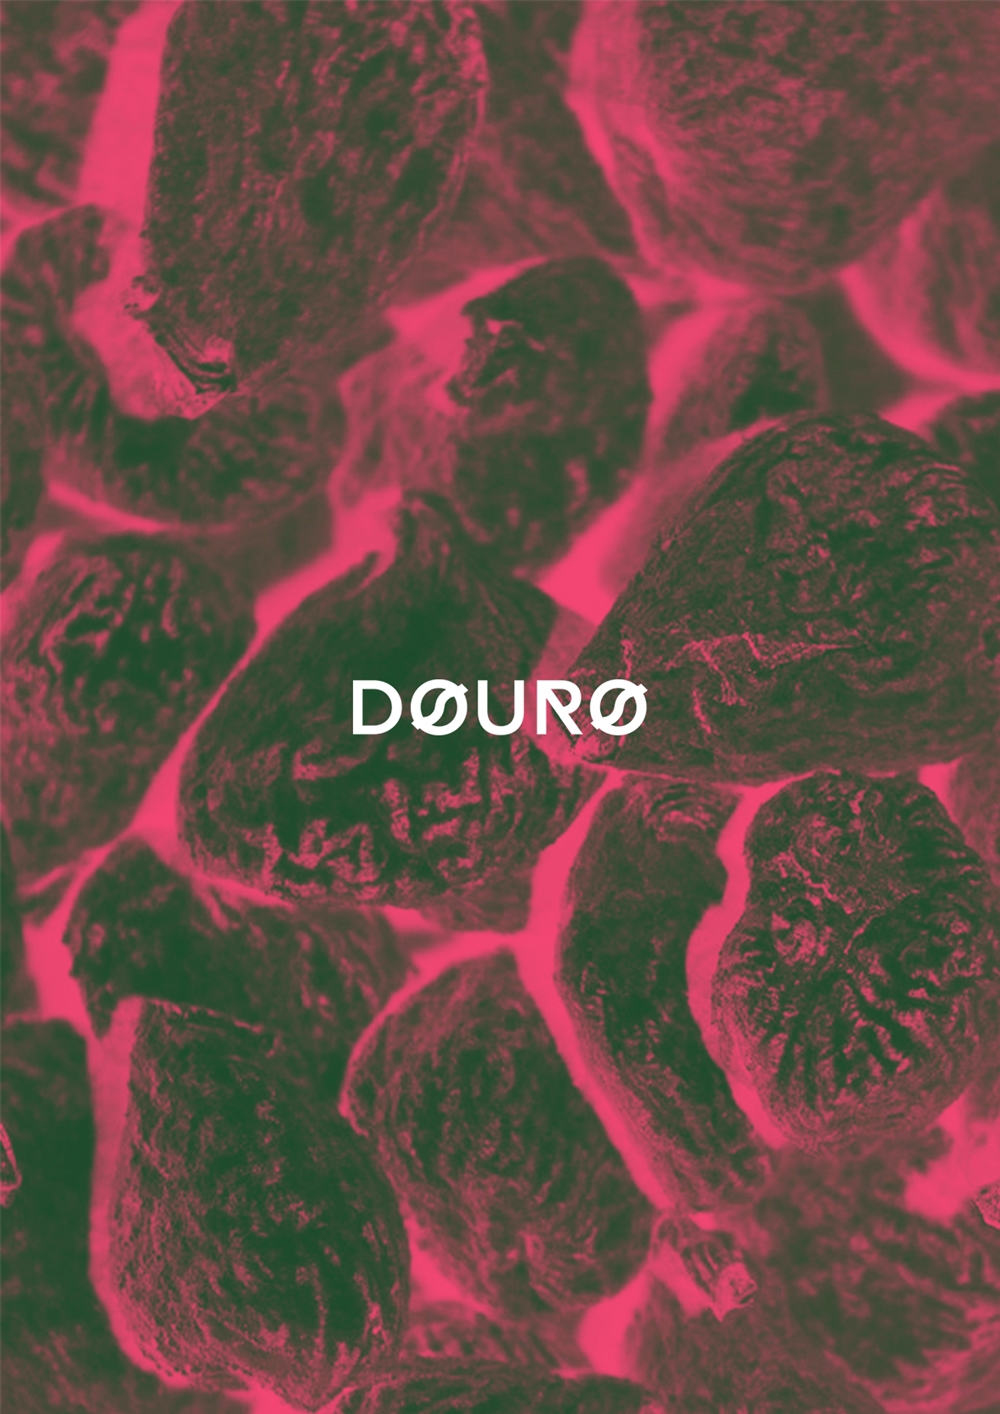 Douro Portugal identidade identity logo typo tipografia poster card campanha campaign texture pattern postal gif